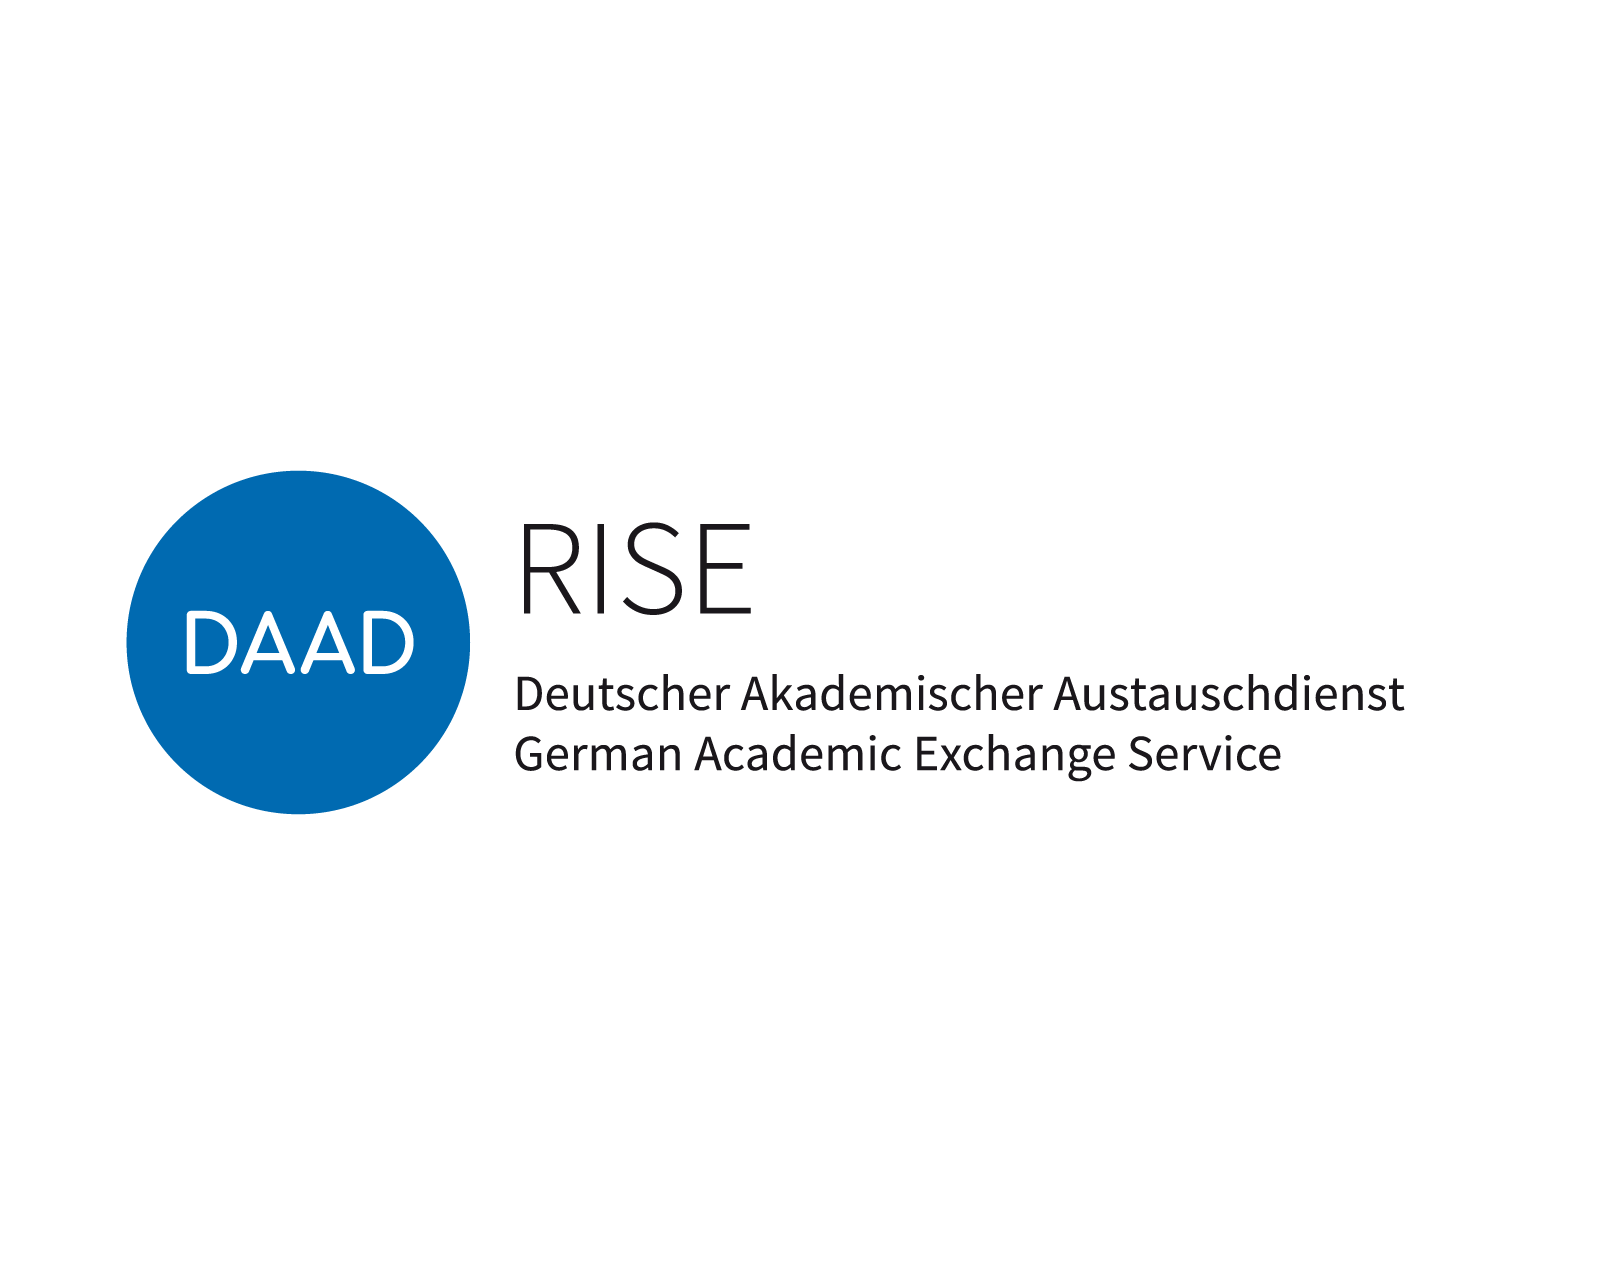 DAAD Rise logo.